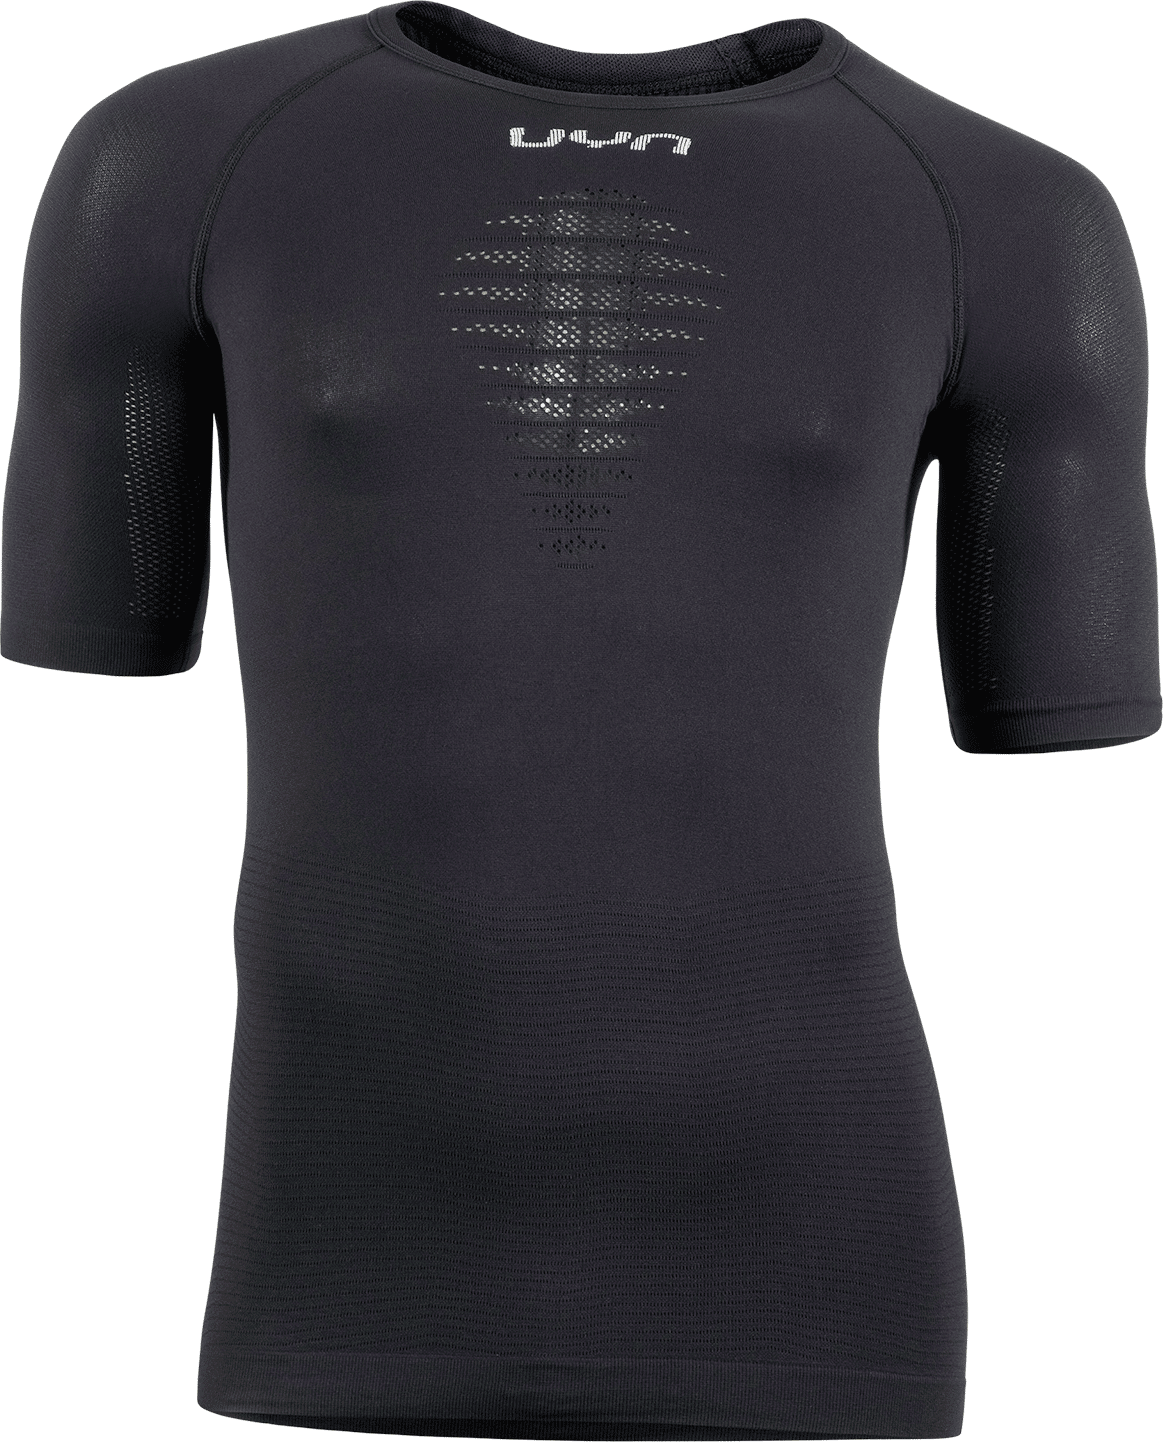 Uyn Energyon s/sl - Camiseta técnica - Hombre